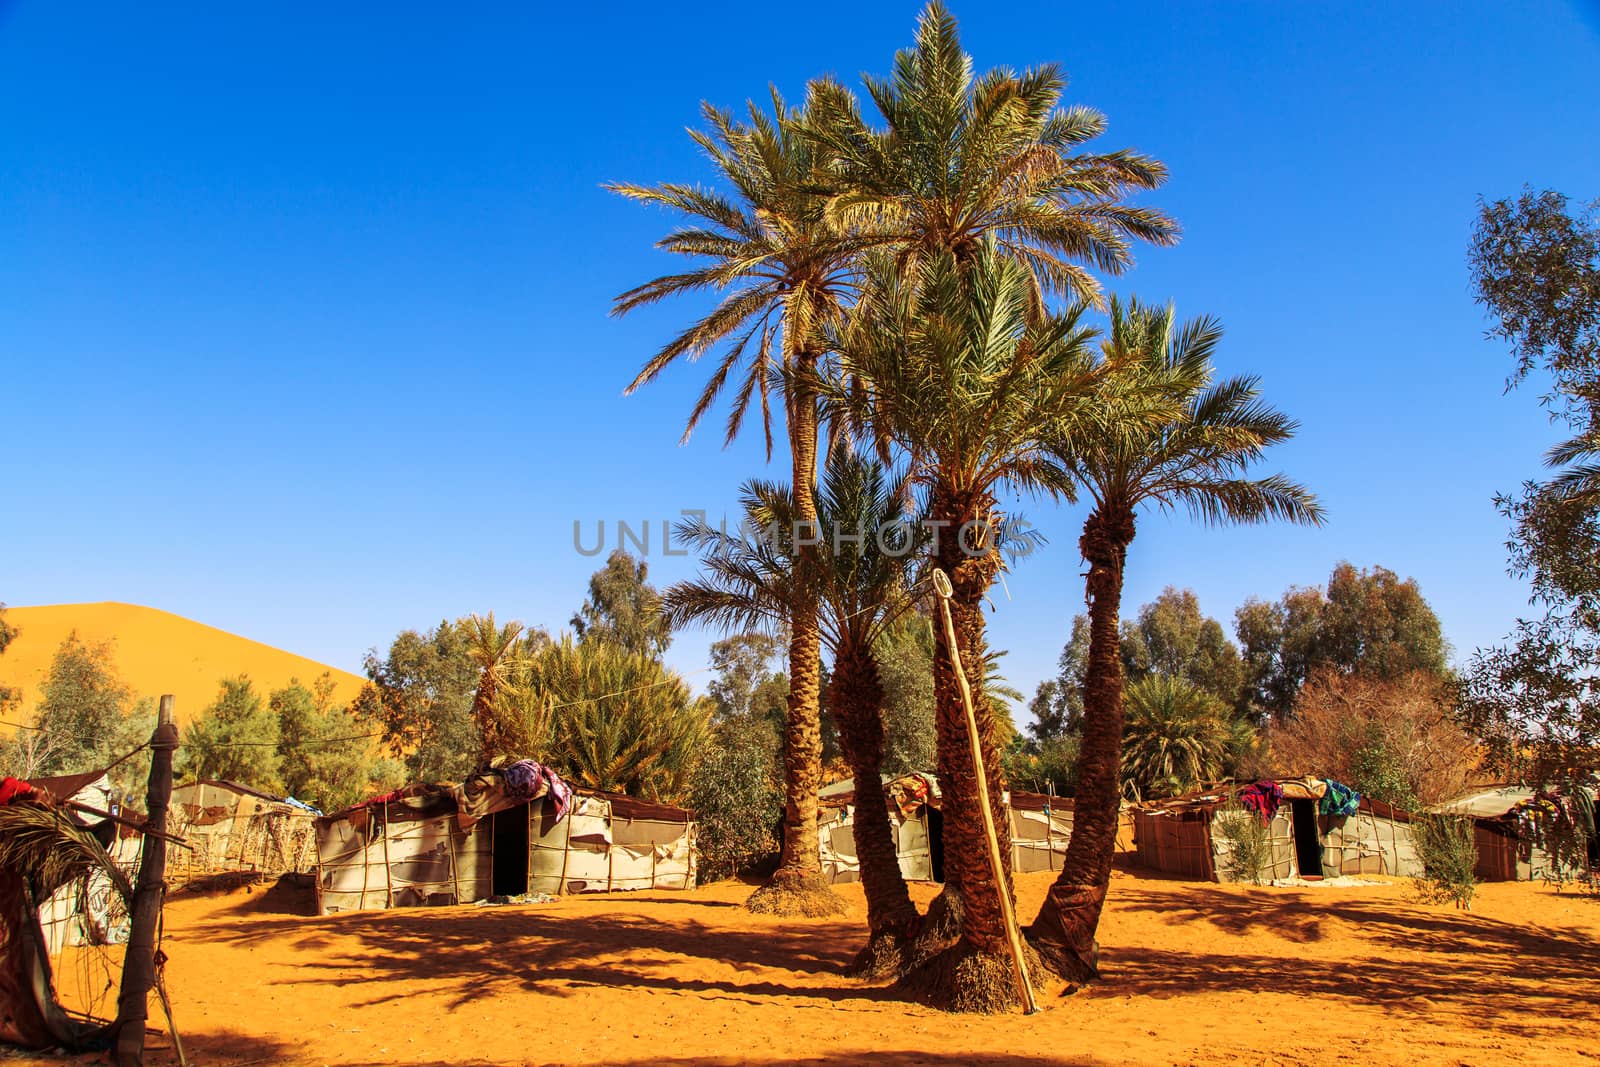 Sand dunes and oasis in the Sahara Desert, Merzouga, Morocco